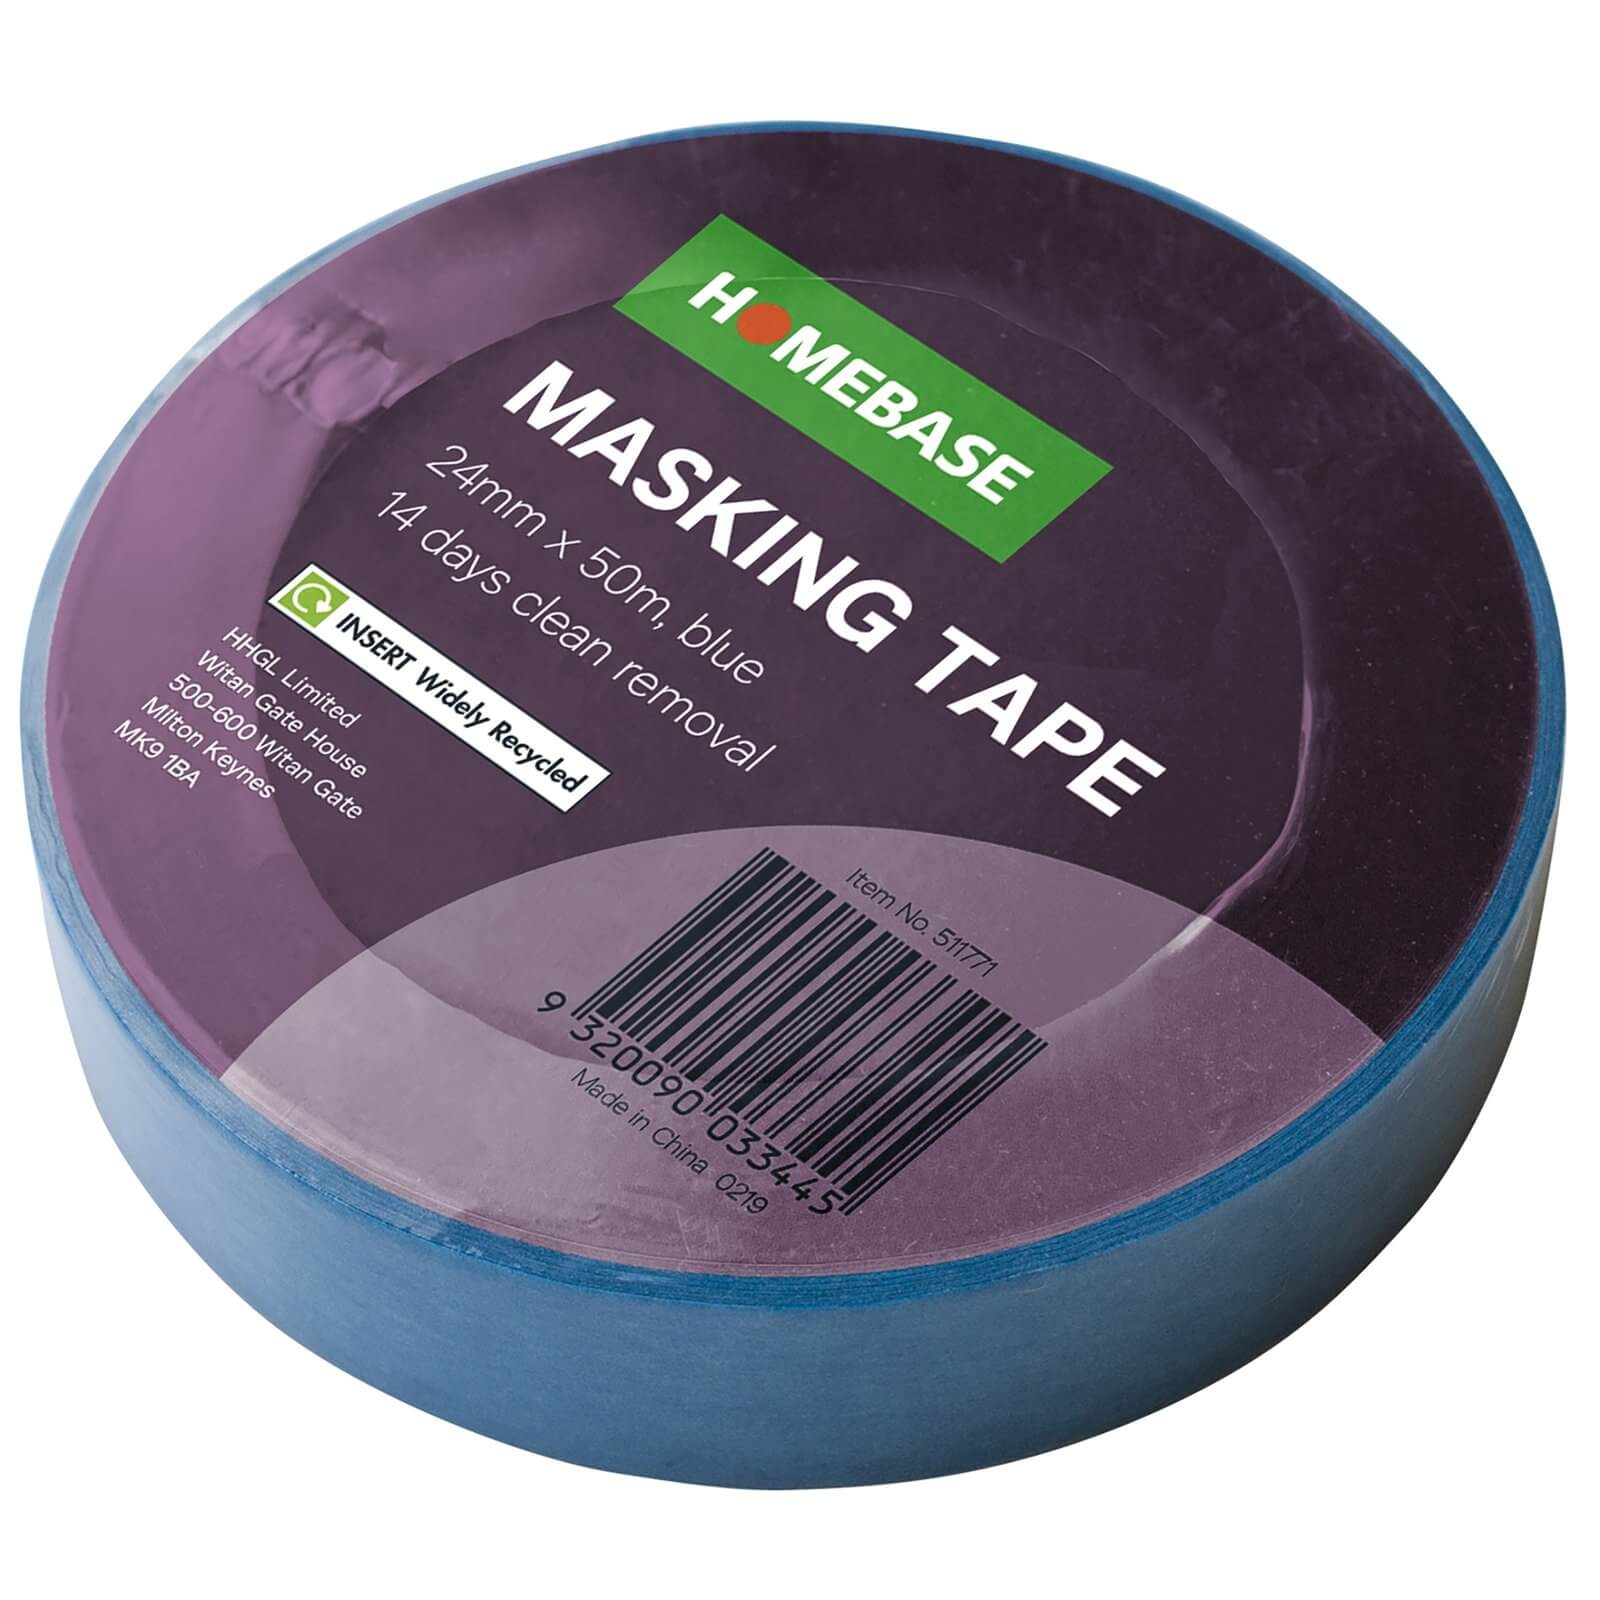 Masking Tape - Blue